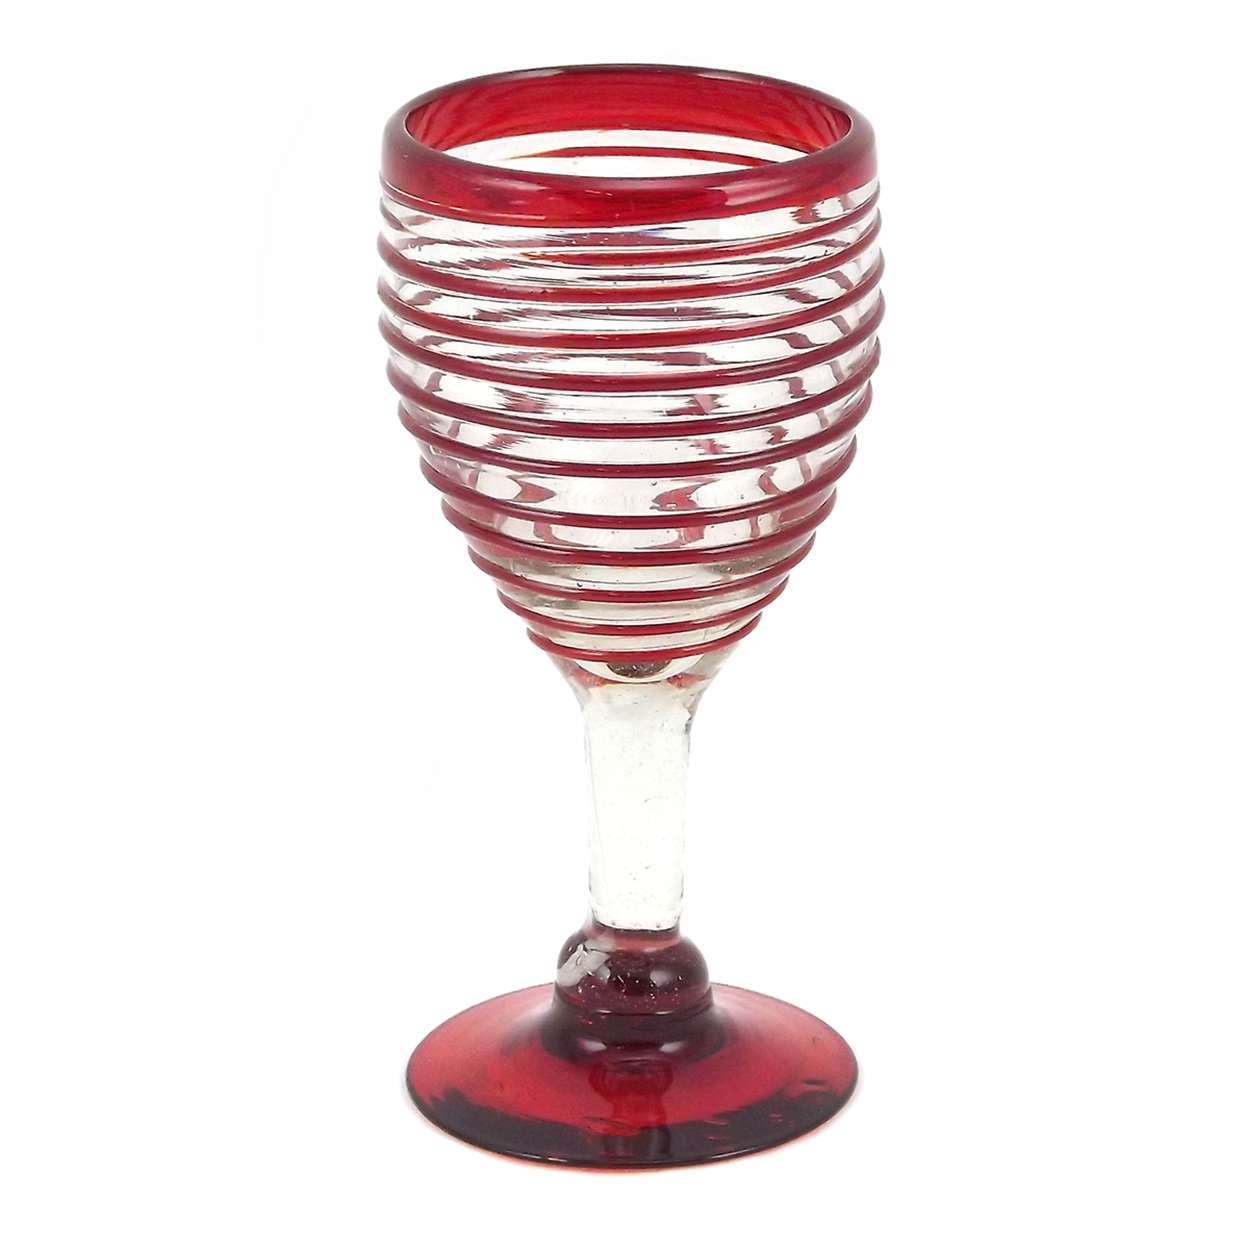 Blown Glass Spiral Grip - Red Wine Glass - 9 oz